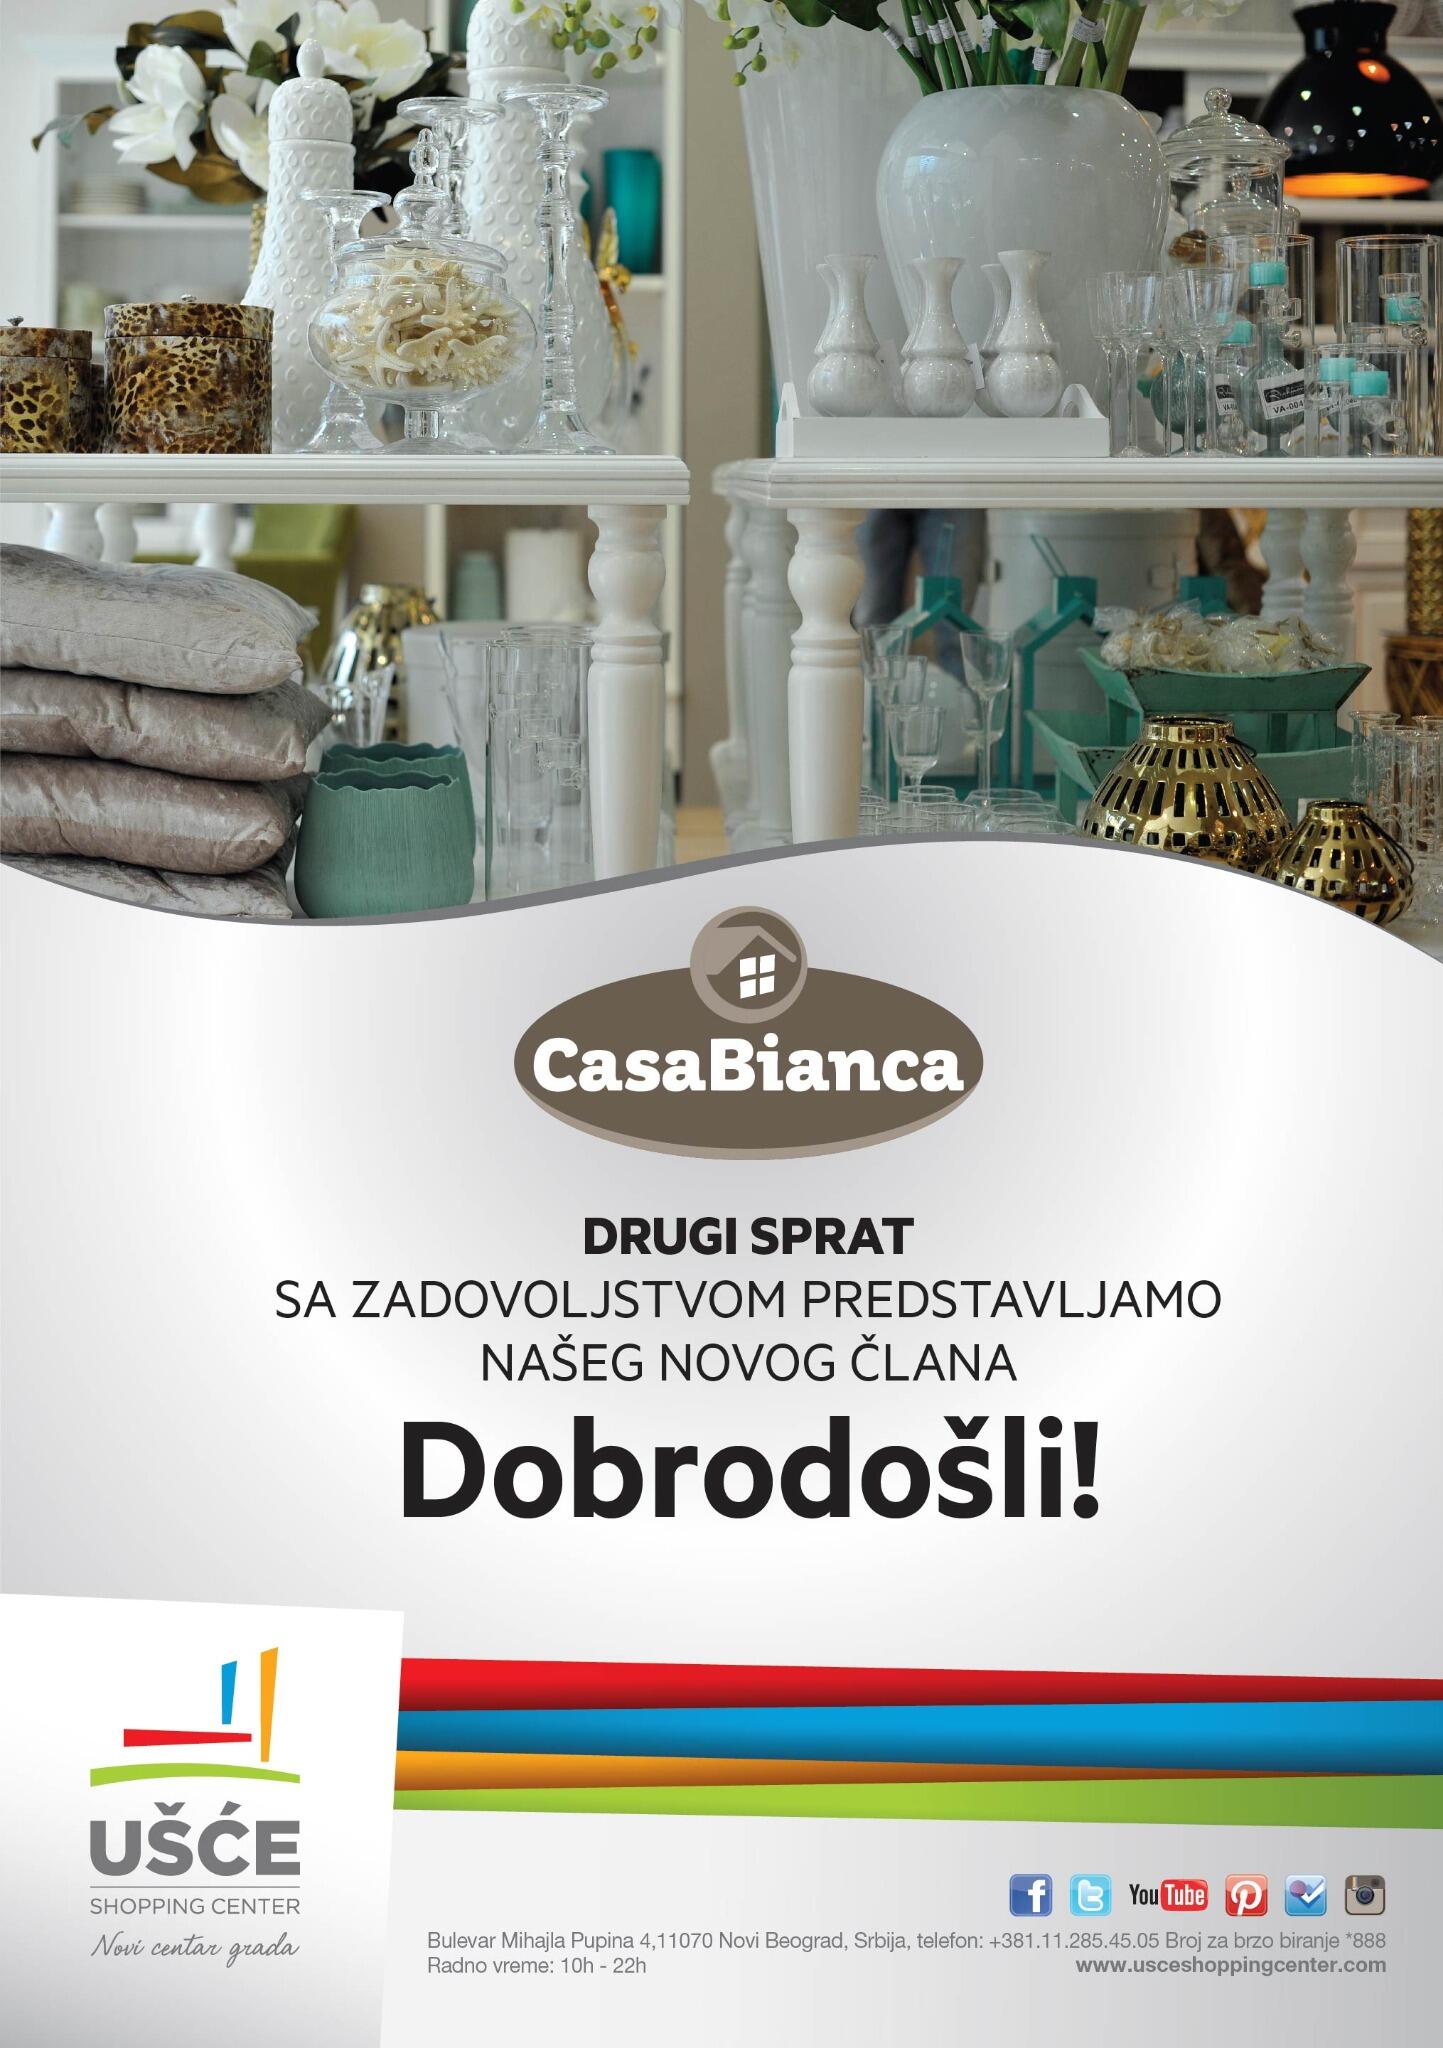 UŠĆE Shopping Center on Twitter: "CasaBianca vam nudi nameštaj, posuđe,  posteljinu, slike, ogledala i rasvetu poznatih evropskih brendova,  dobrodošli! http://t.co/ZJzxnWXqEQ" / Twitter